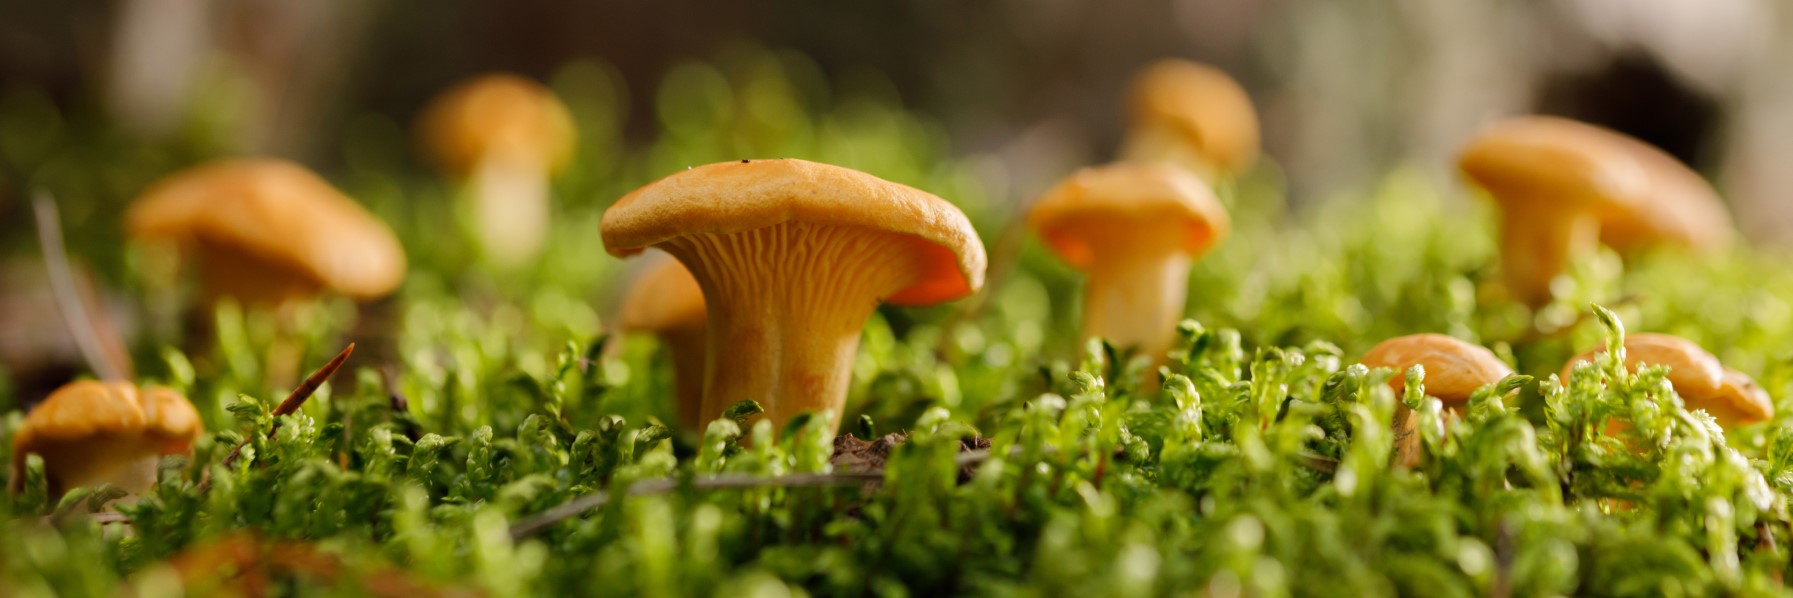 Mushroom Growing Diploma artwork